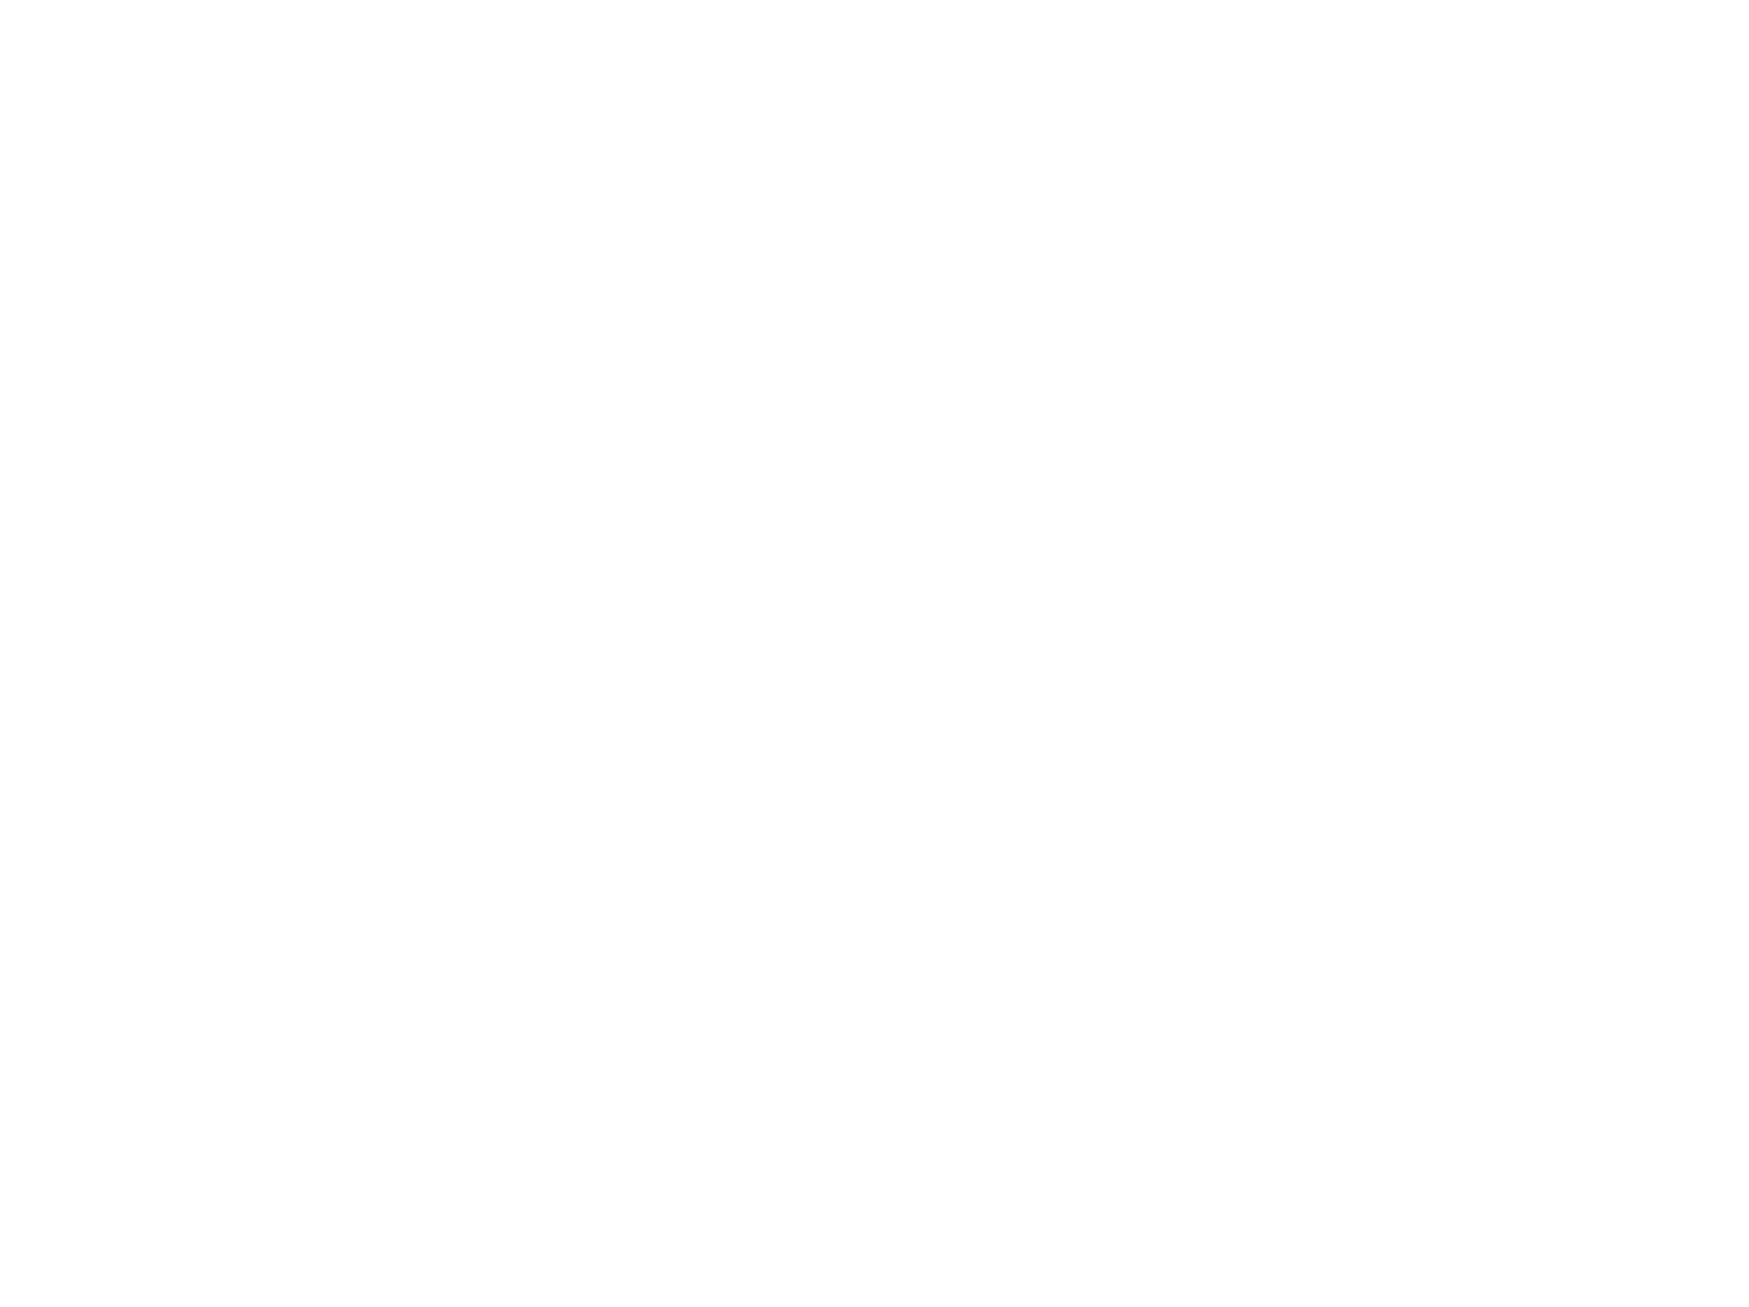 Michelangelo's Sistine Chapel: Perth Exhibit